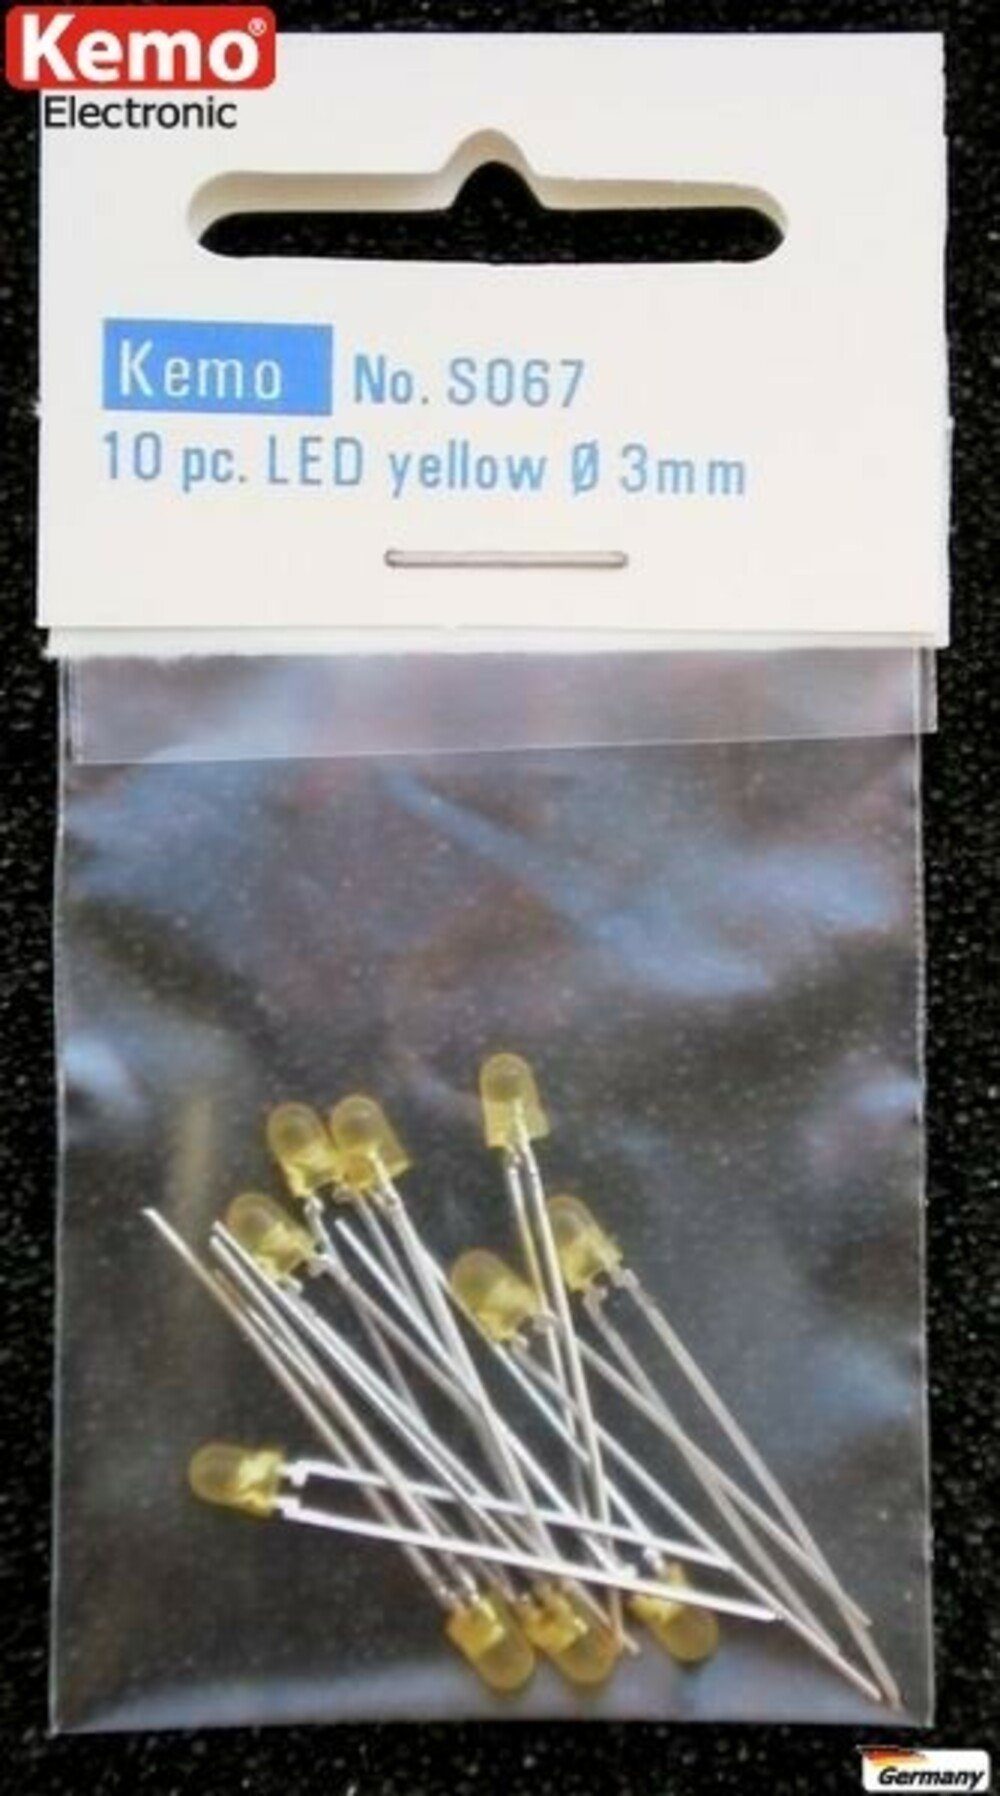 Kemo Modellbausatz LED Ø 3 mm gelb, ca. 10 Stück